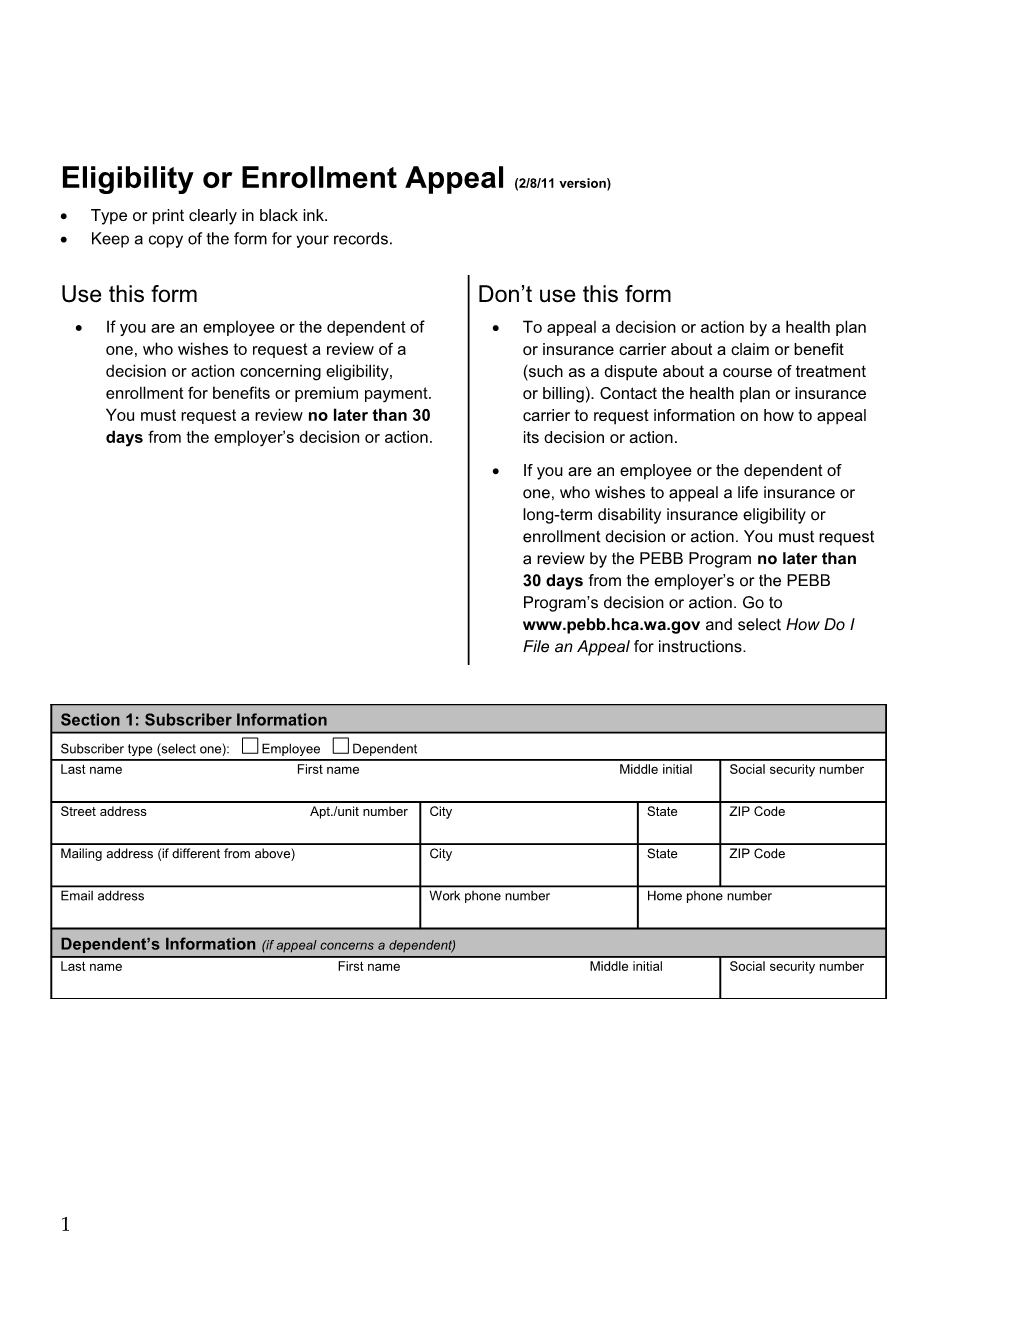 Benefits Enrollment Or Eligibility Appeal